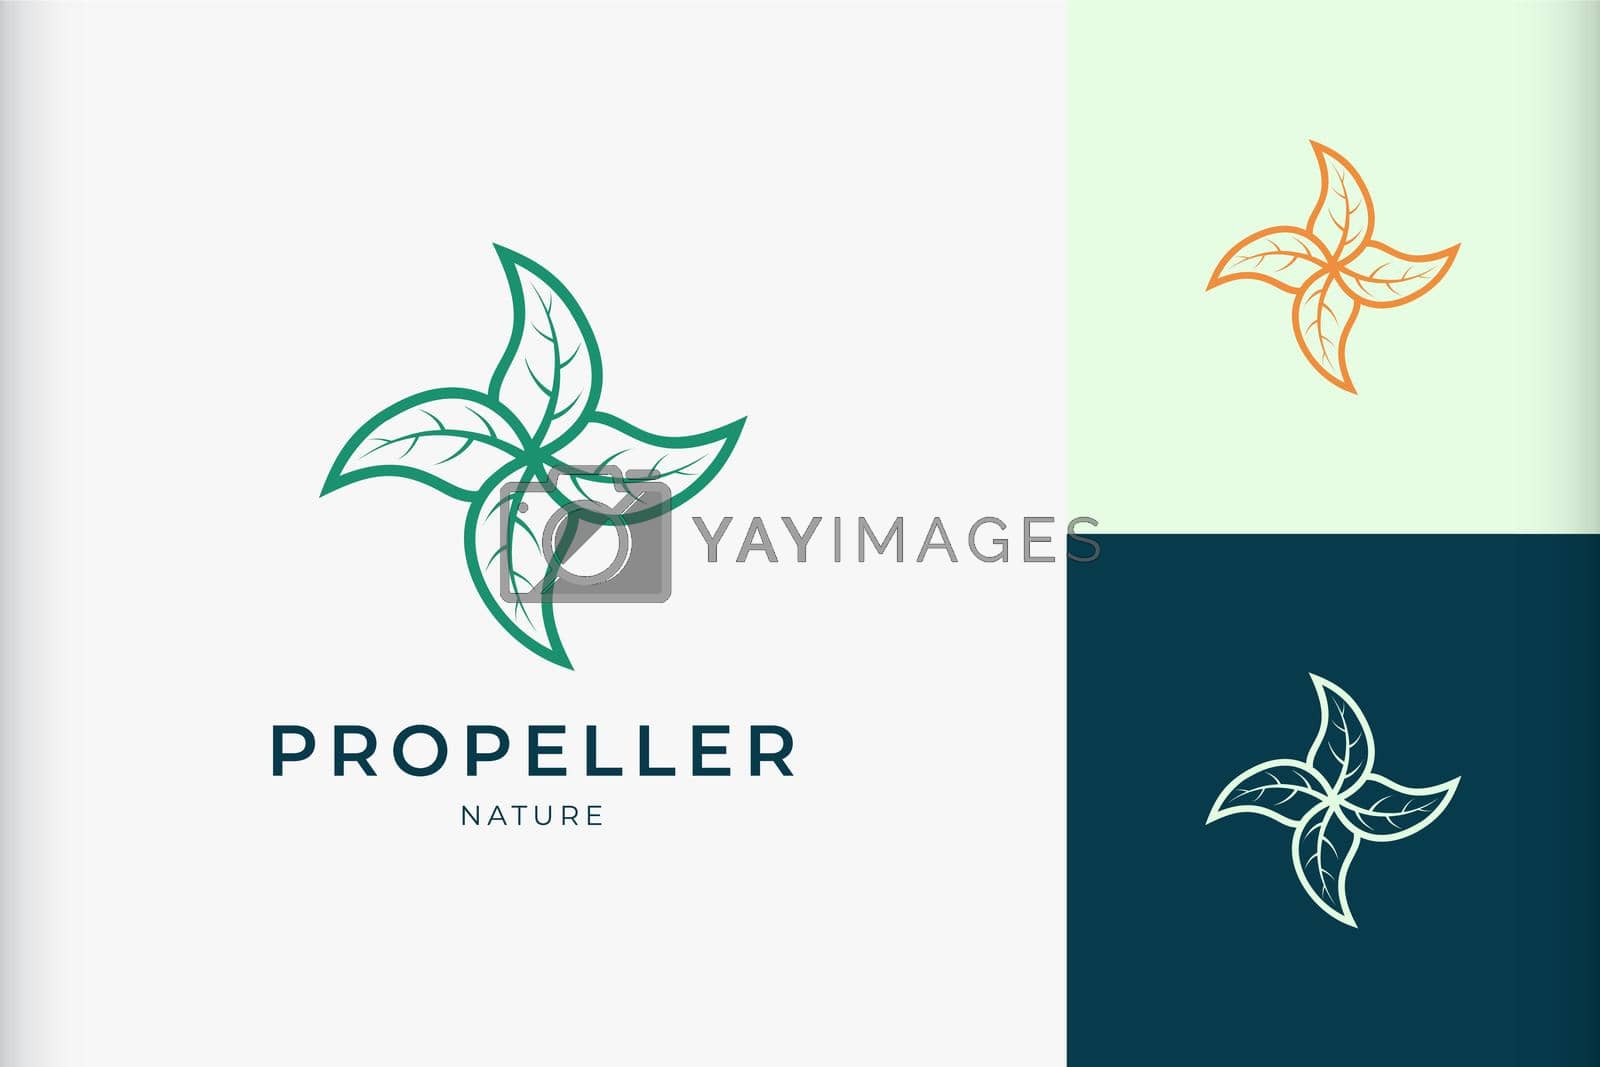 Royalty free image of Leaf propeller logo for health or medicine brand by murnifine